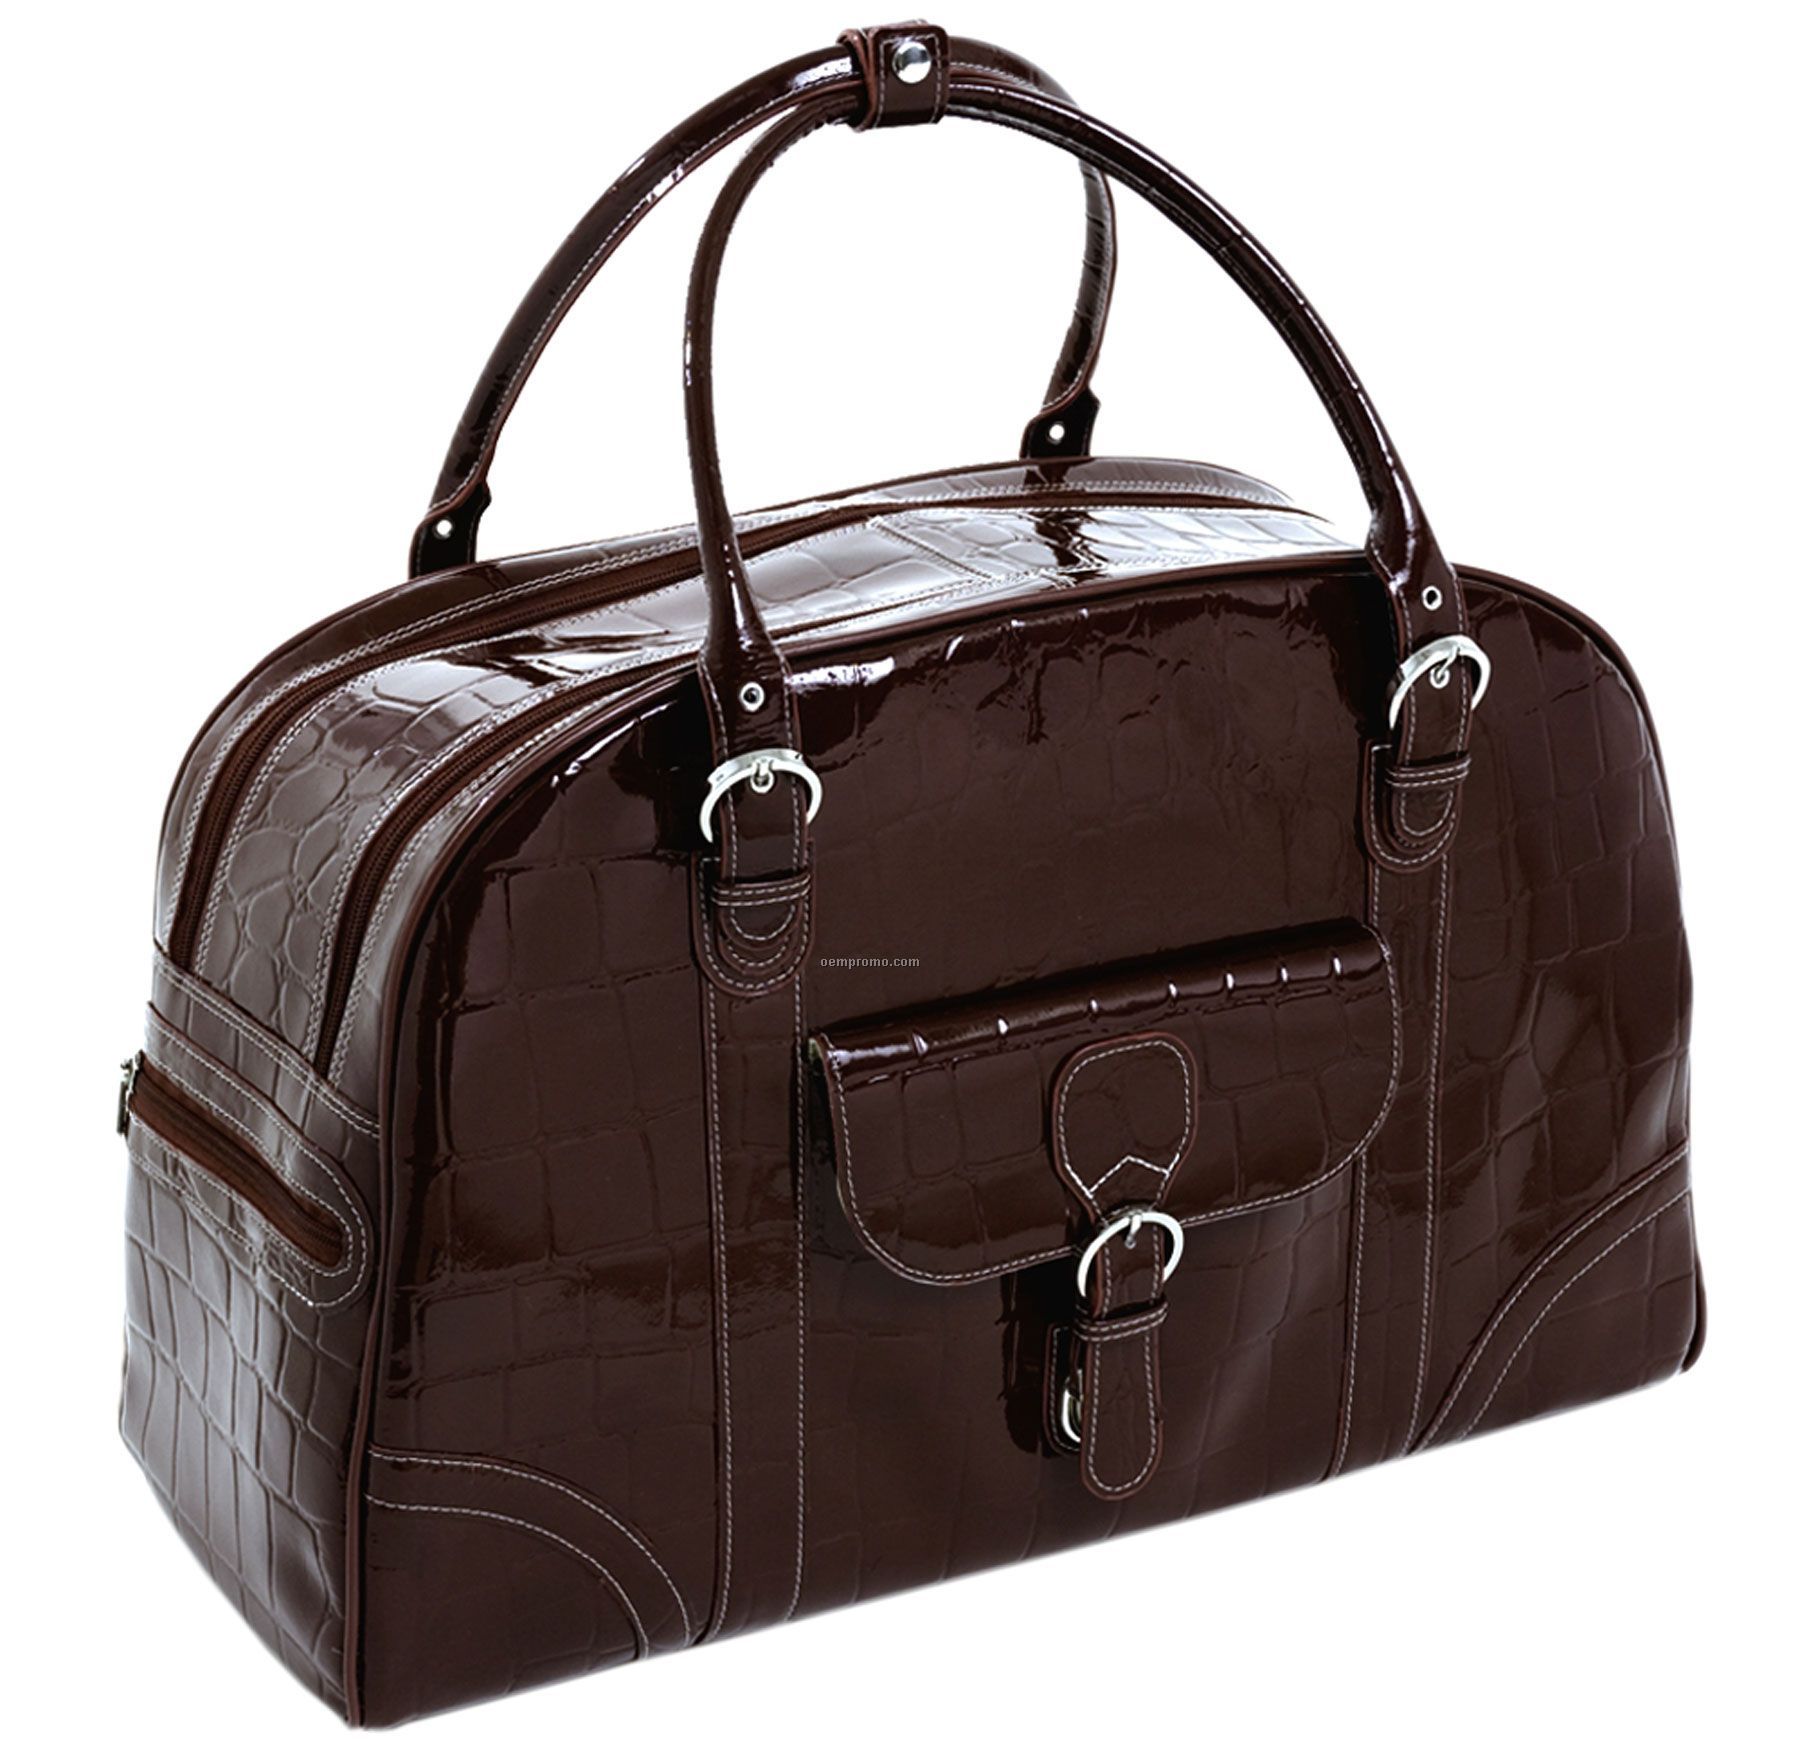 Buranco, Leather Ladies' Duffel Bag - Chocolate Brown